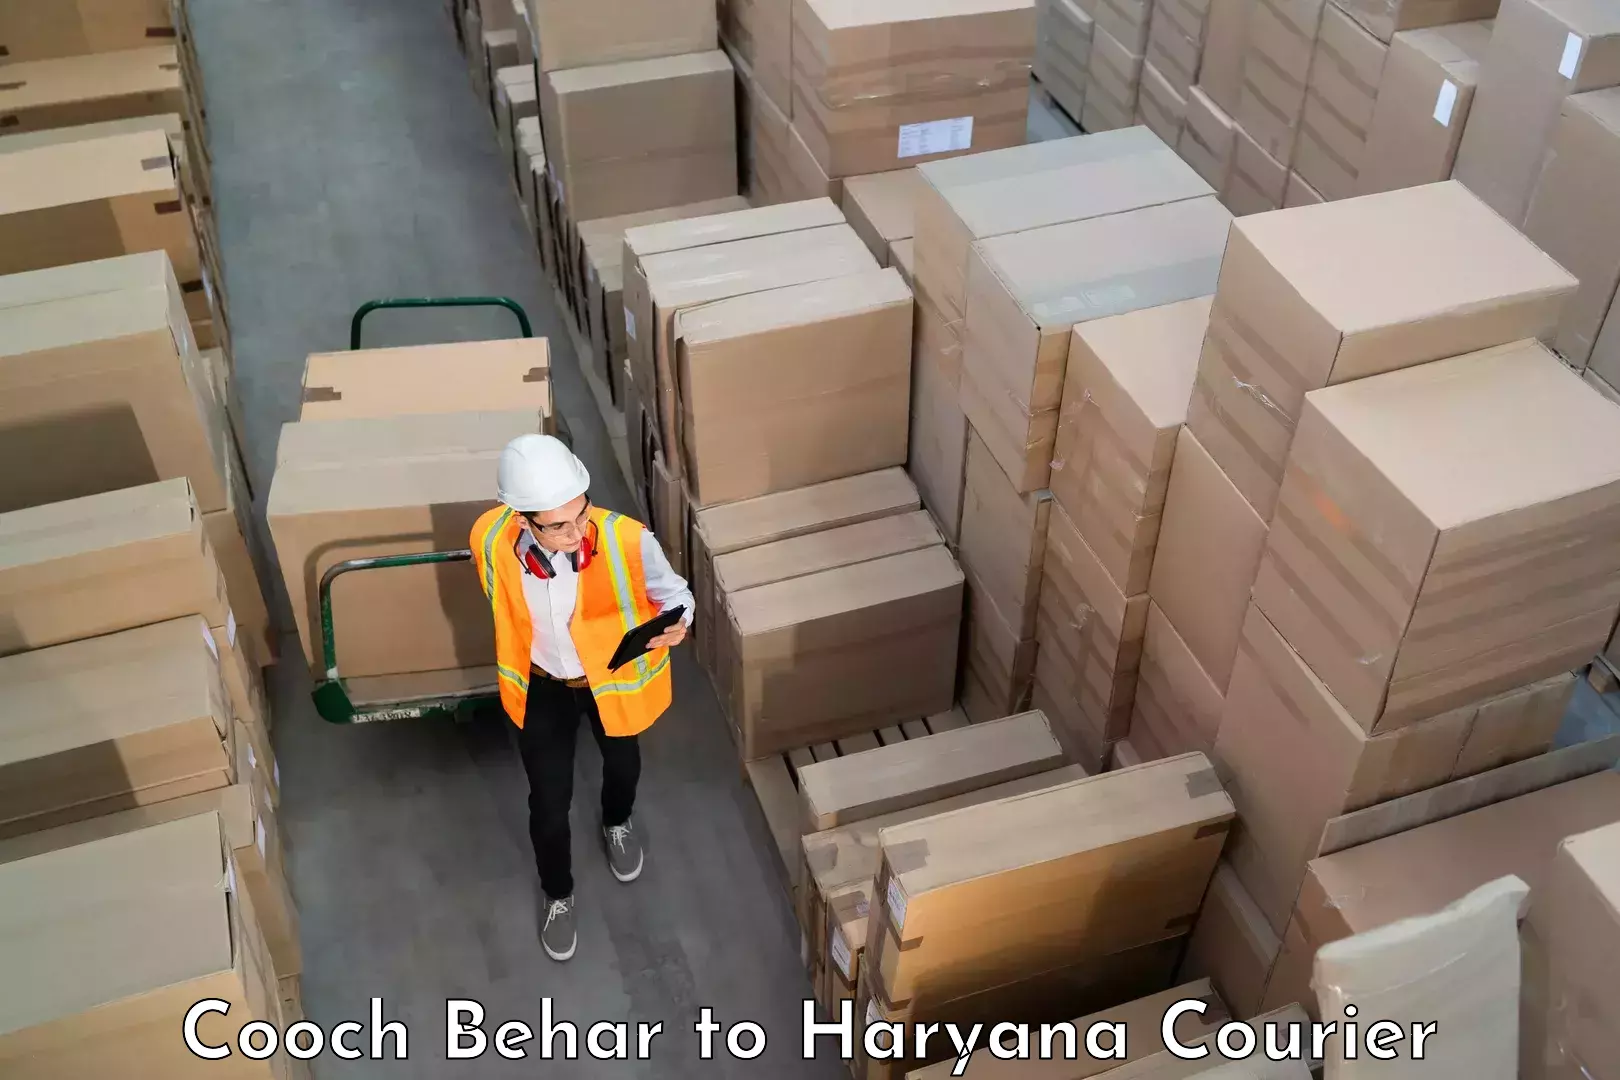 Emergency baggage service Cooch Behar to Ellenabad